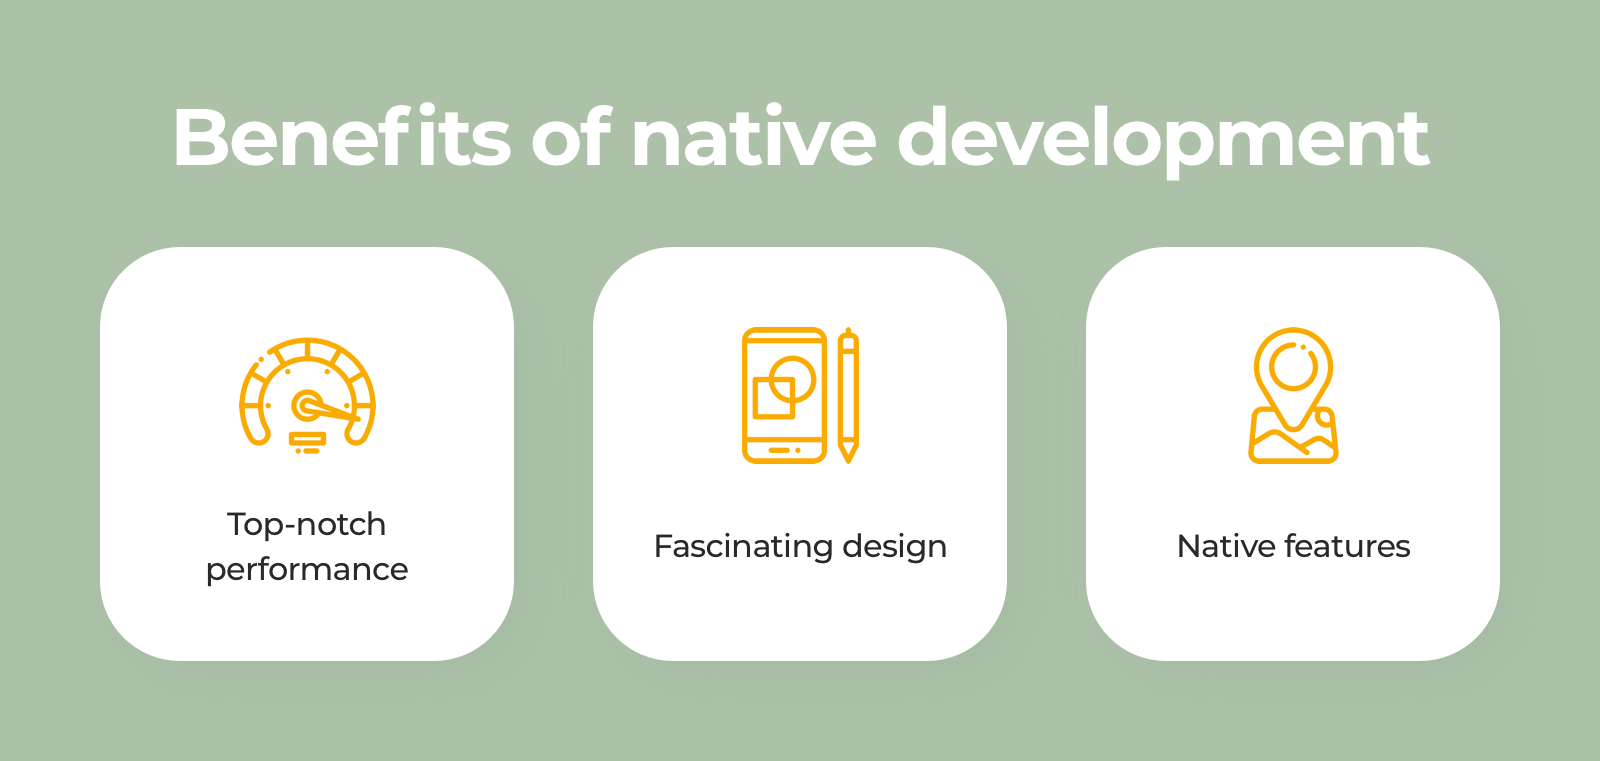 Benefits of native development